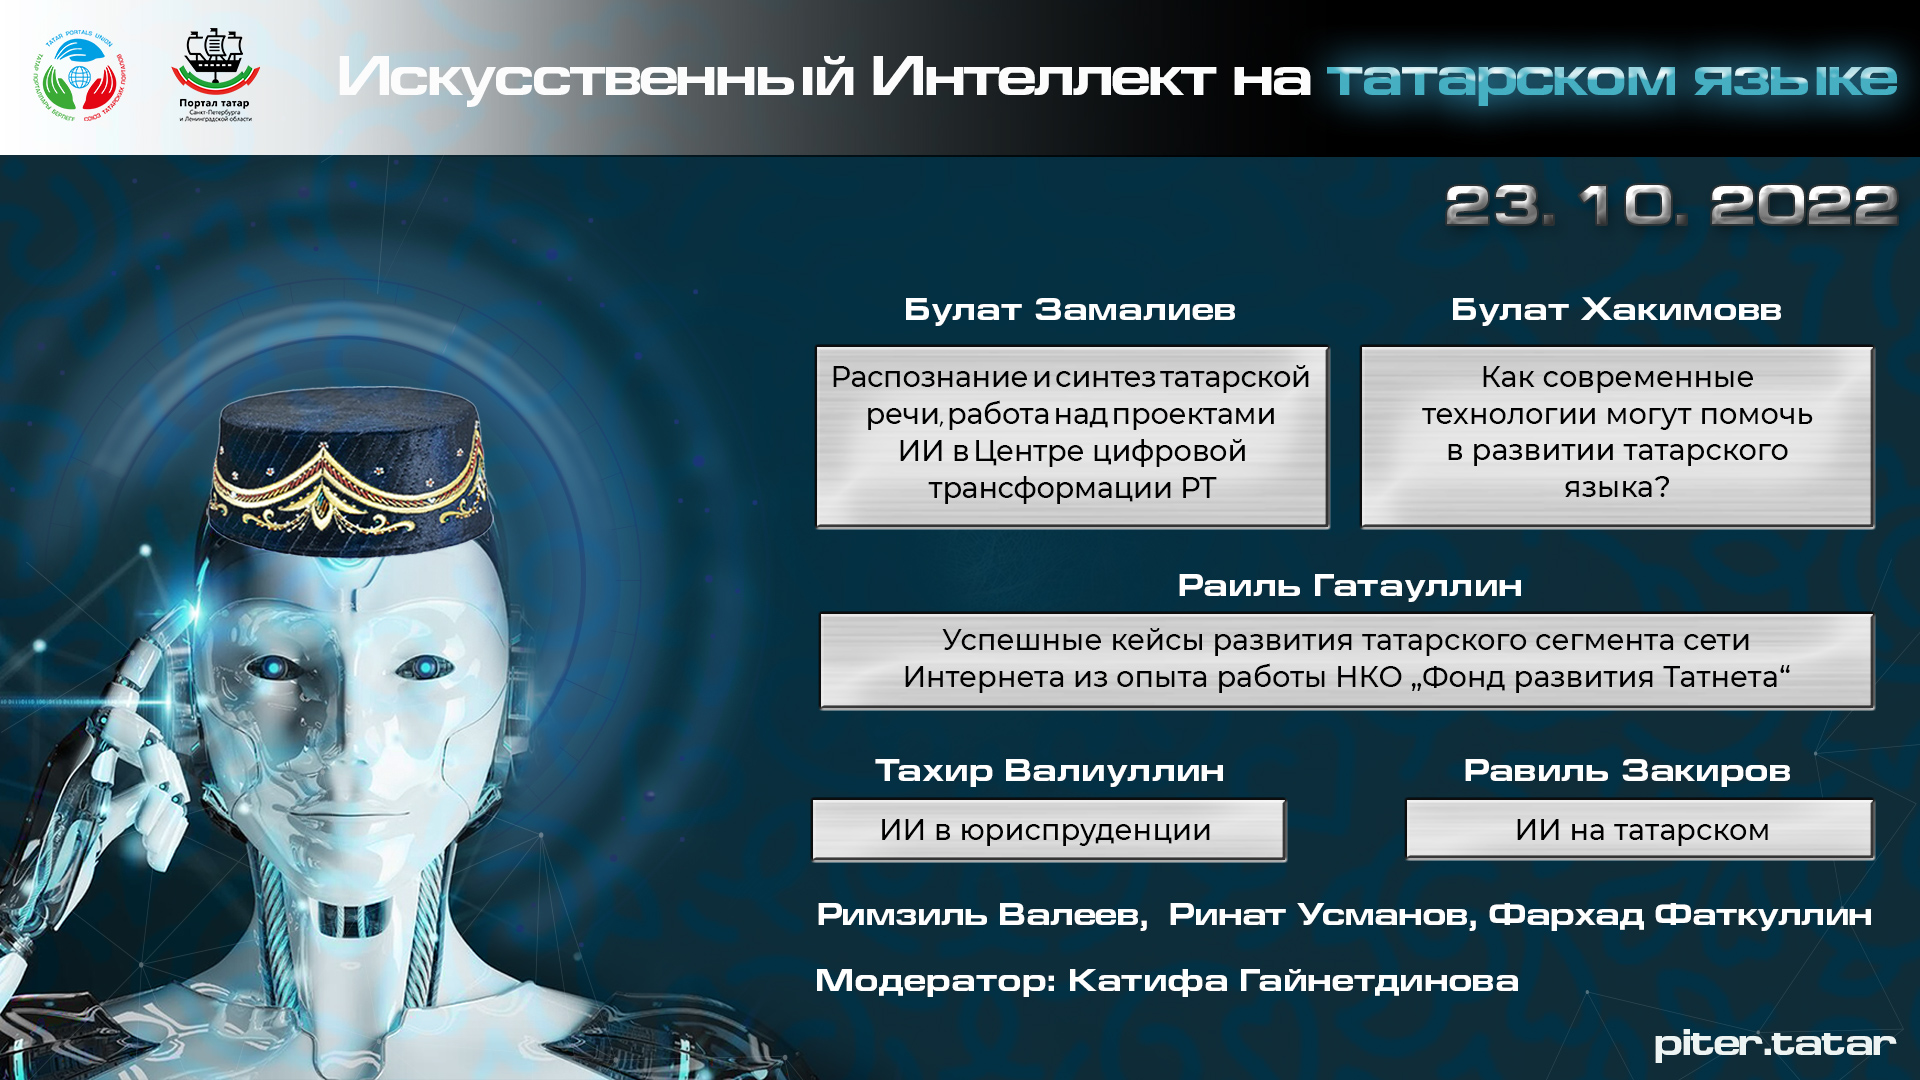 Онлайн-встреча Союза татарских порталов (23.10.2022)